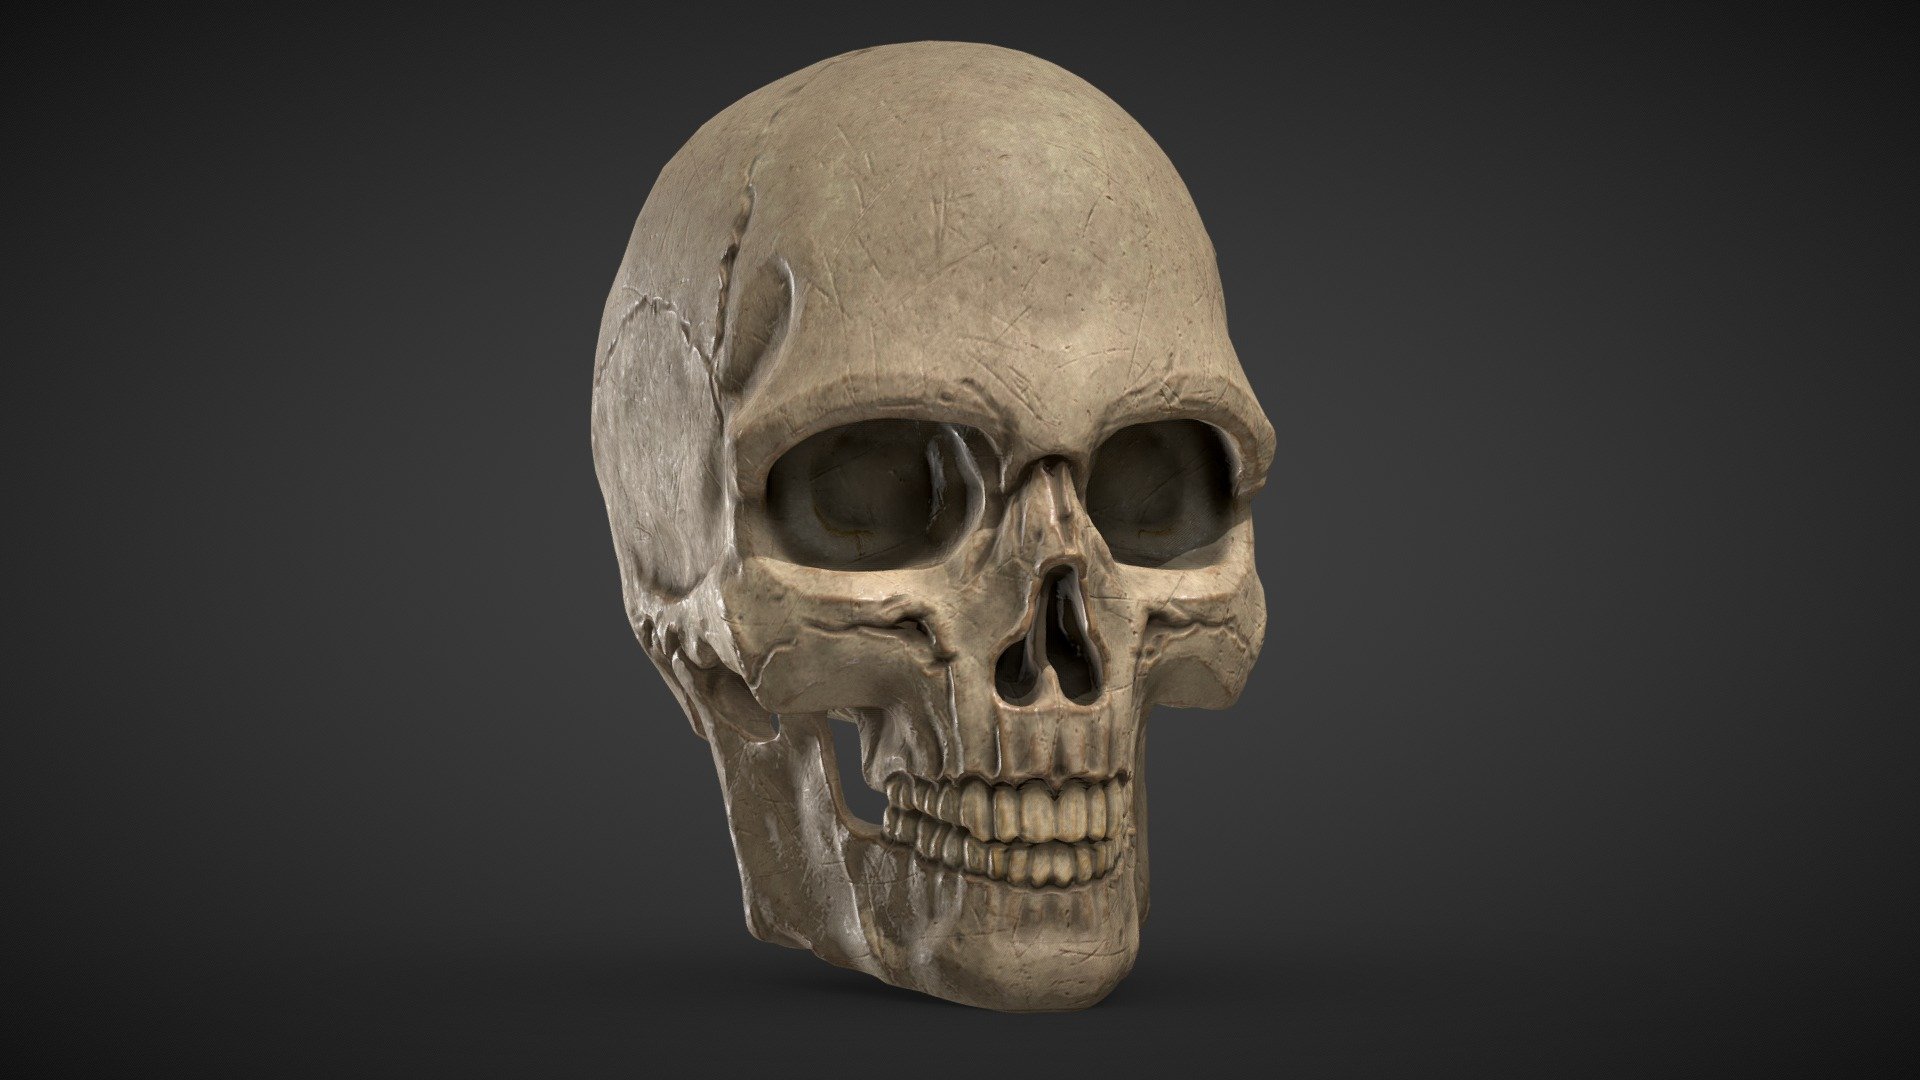 Realistic Human Skull study